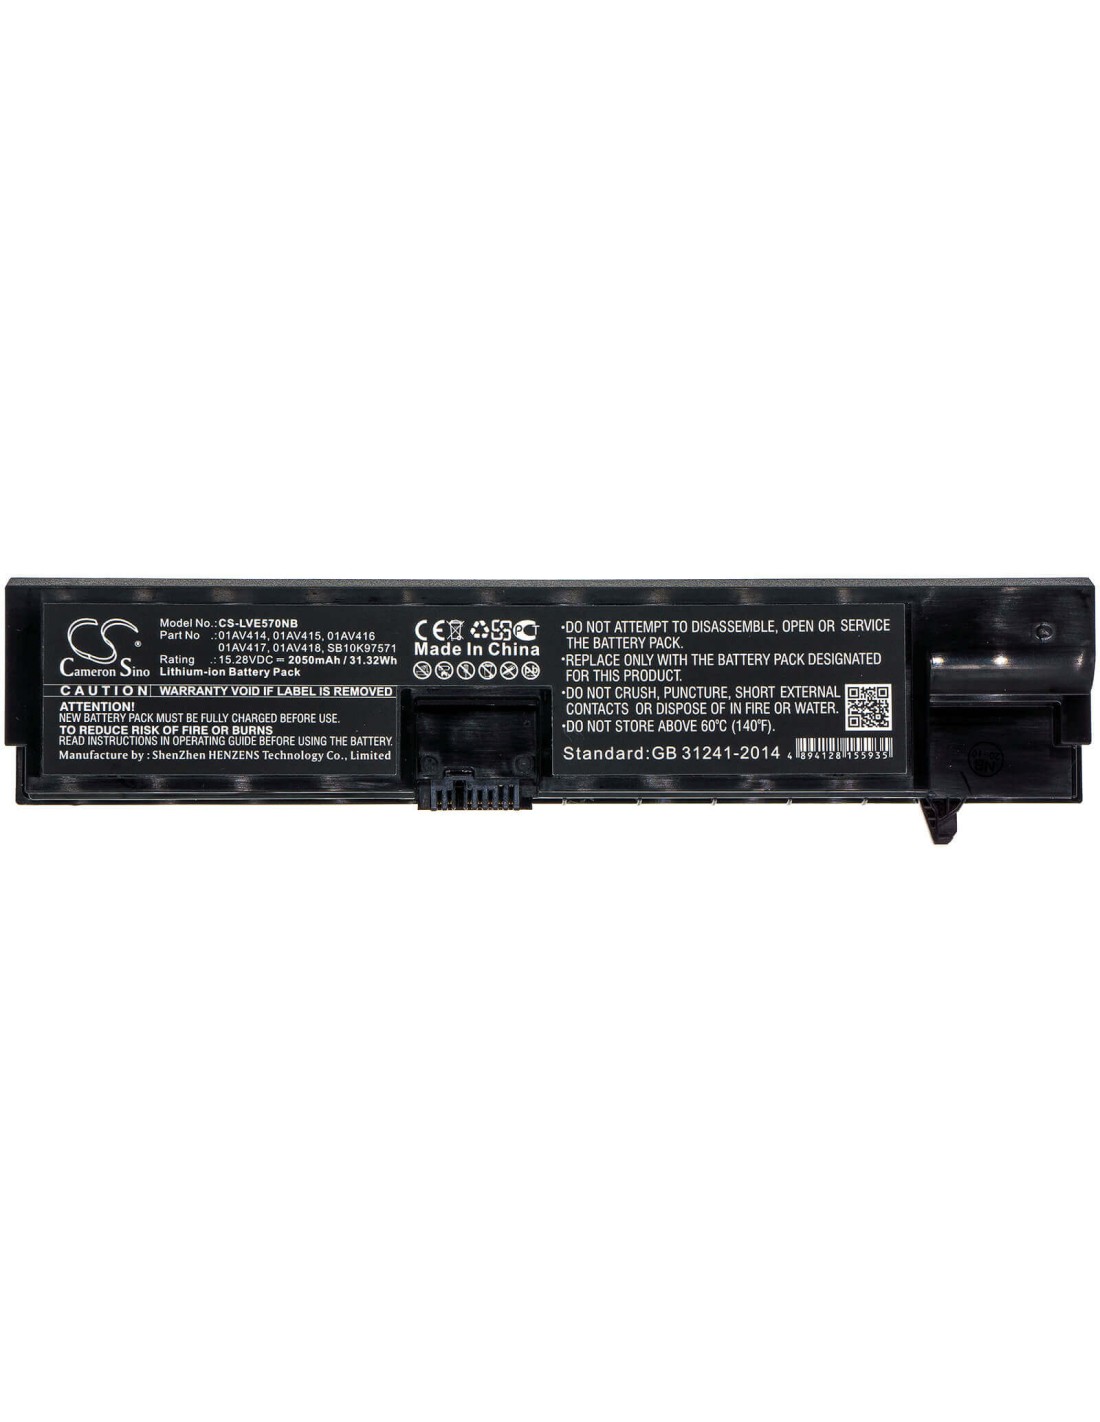 Battery for Lenovo, Hinkpad Edge E570, Thinkpad E570, Thinkpad E570(20h5005ecd) 15.28V, 2050mAh - 31.32Wh